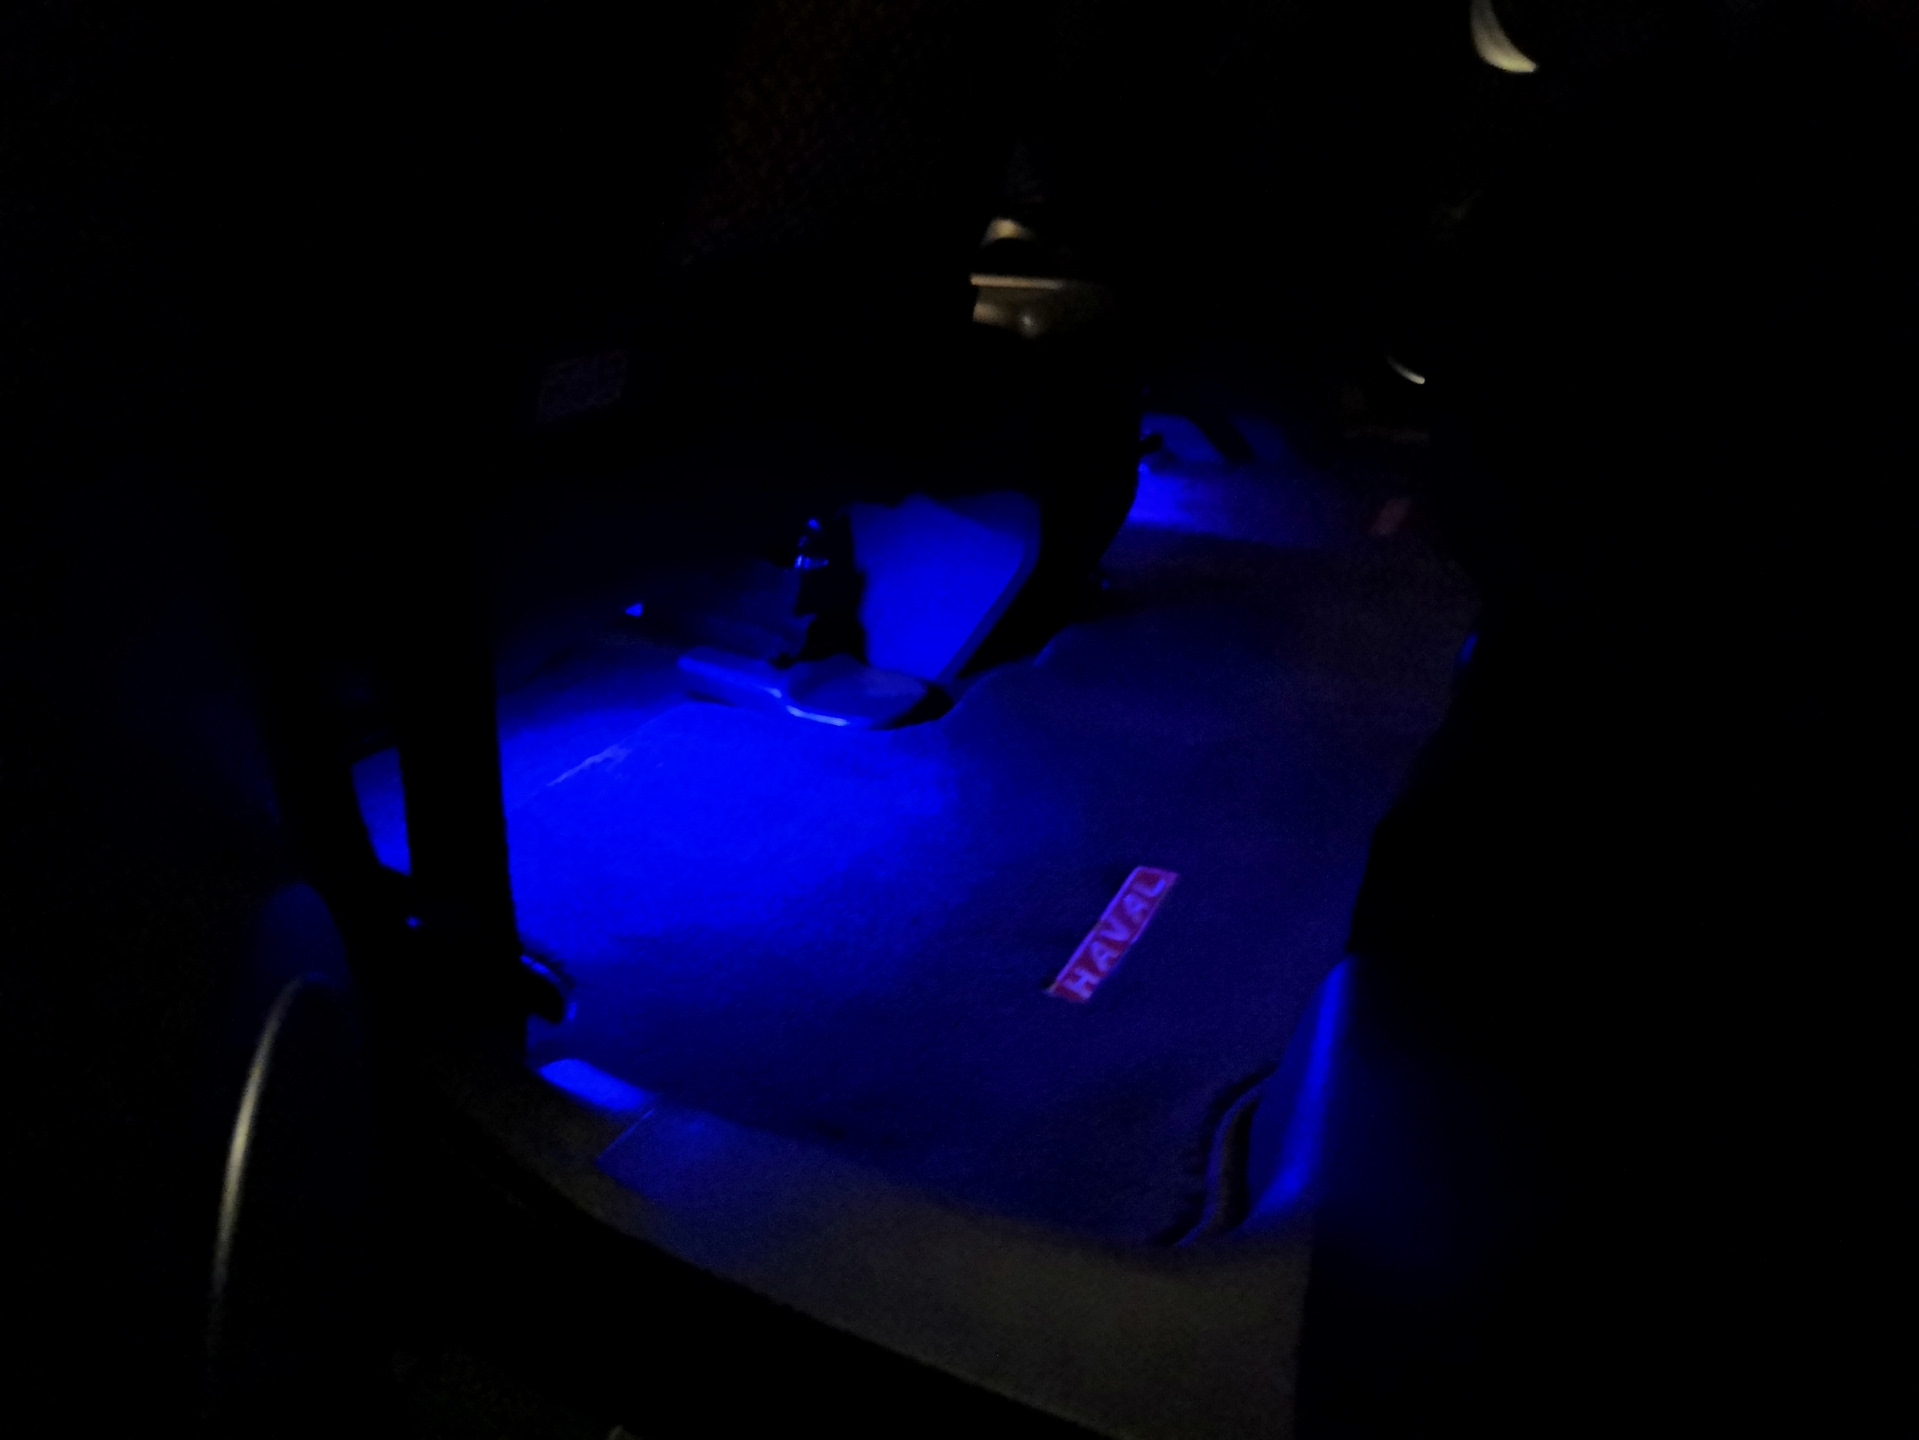 Ps5 подсветка. Подсветка салона Санта Фе 2. Подсветка ног Лансер 10. Подсветка ног Hyundai Santa Fe 0w. Неоновая подсветка Санта Фе 2.